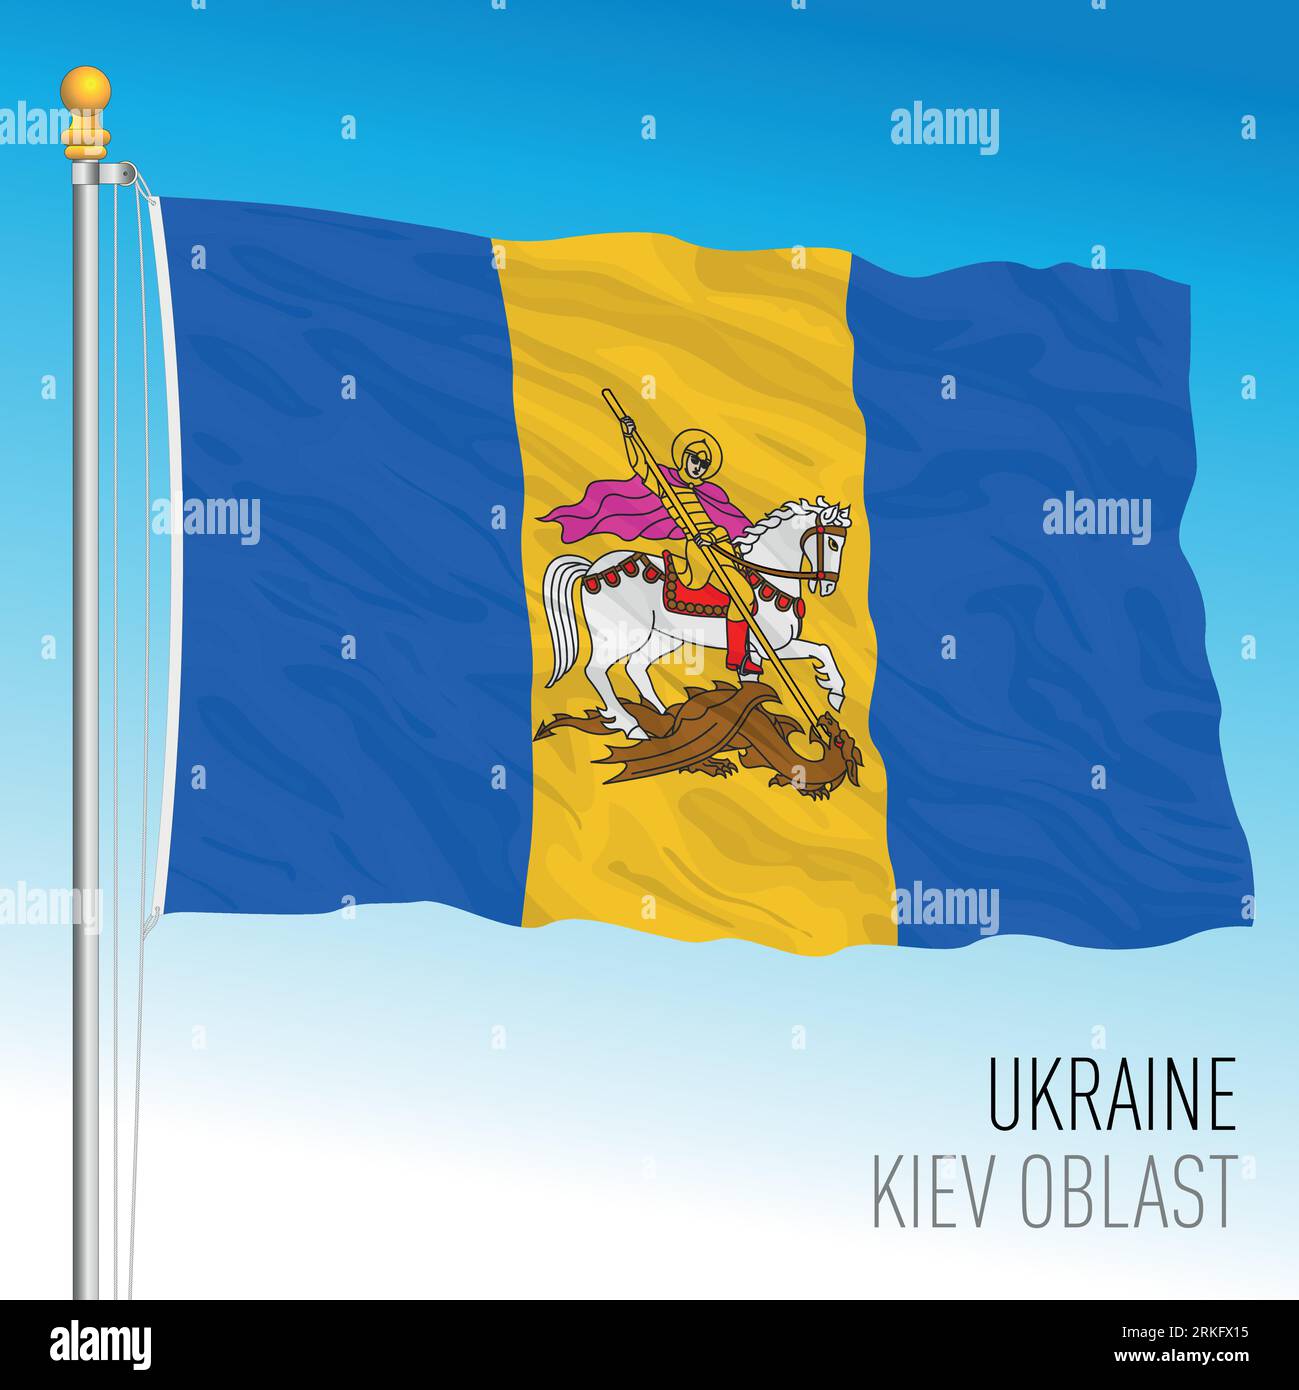 Ukraine, Kiev Oblast waving flag, europe, vector illustration Stock Vector